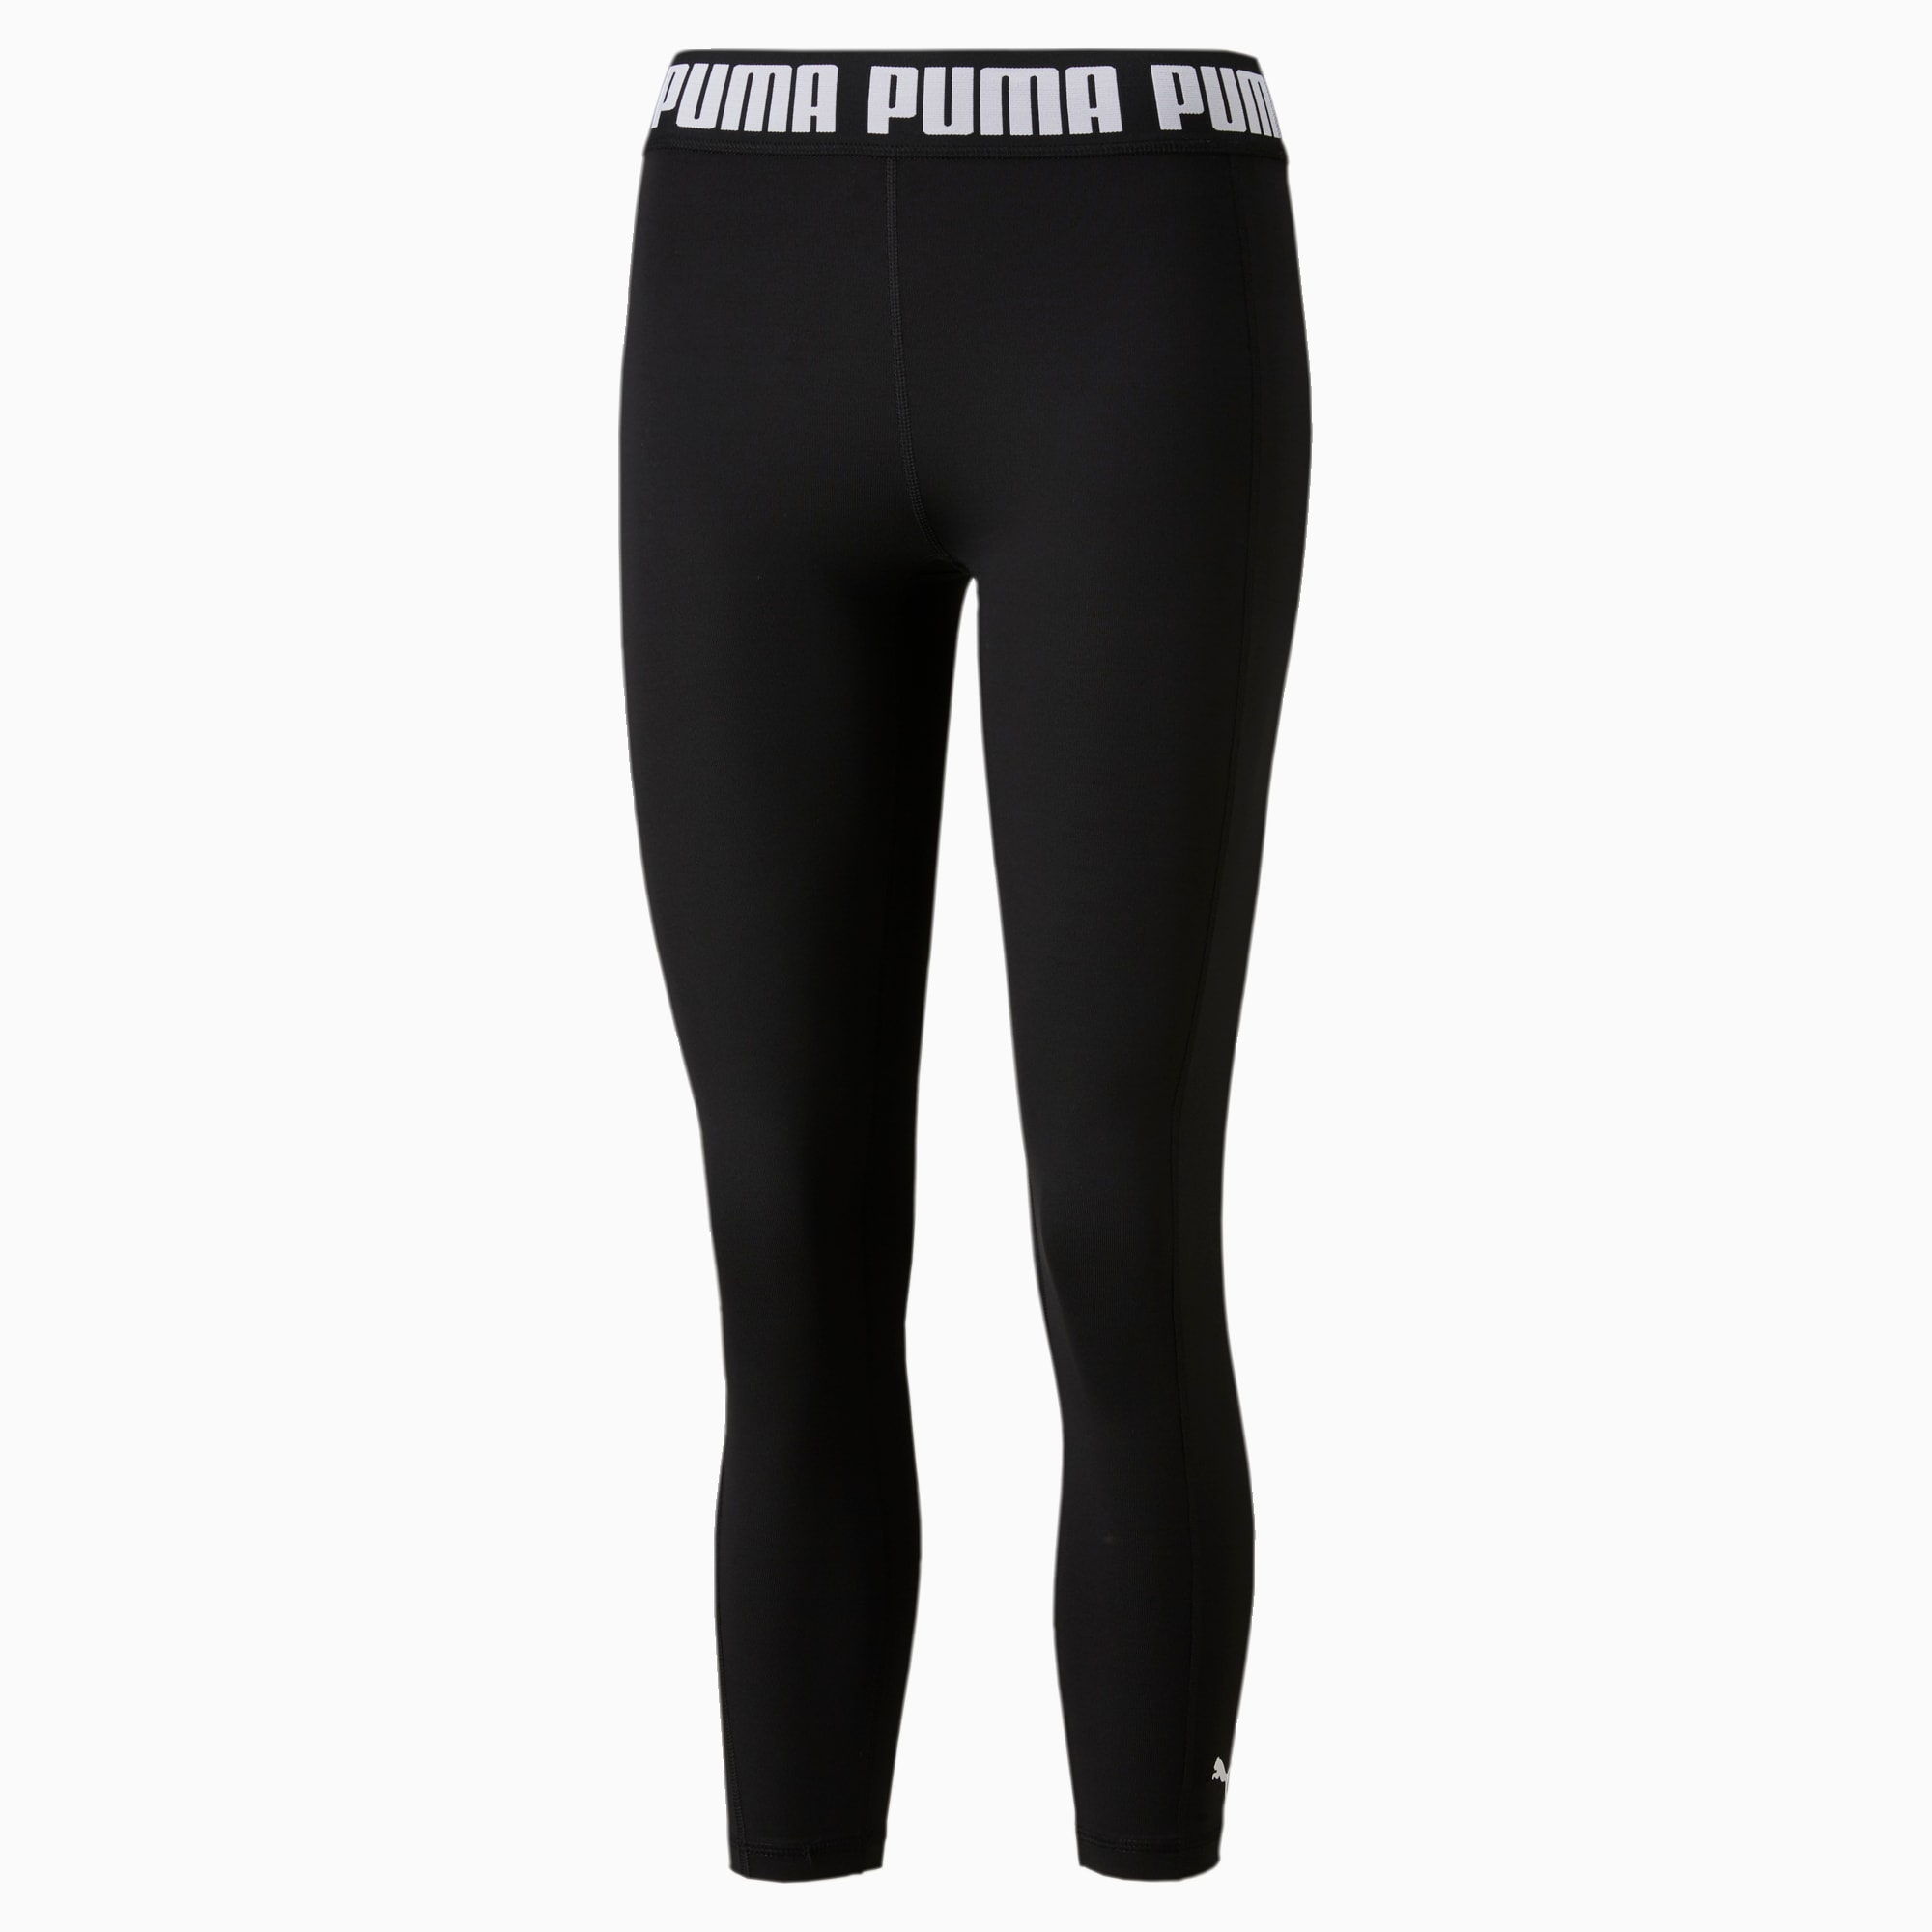 PUMA Strong High Waisted Women's Training Leggings, Black, Size XS, Clothing